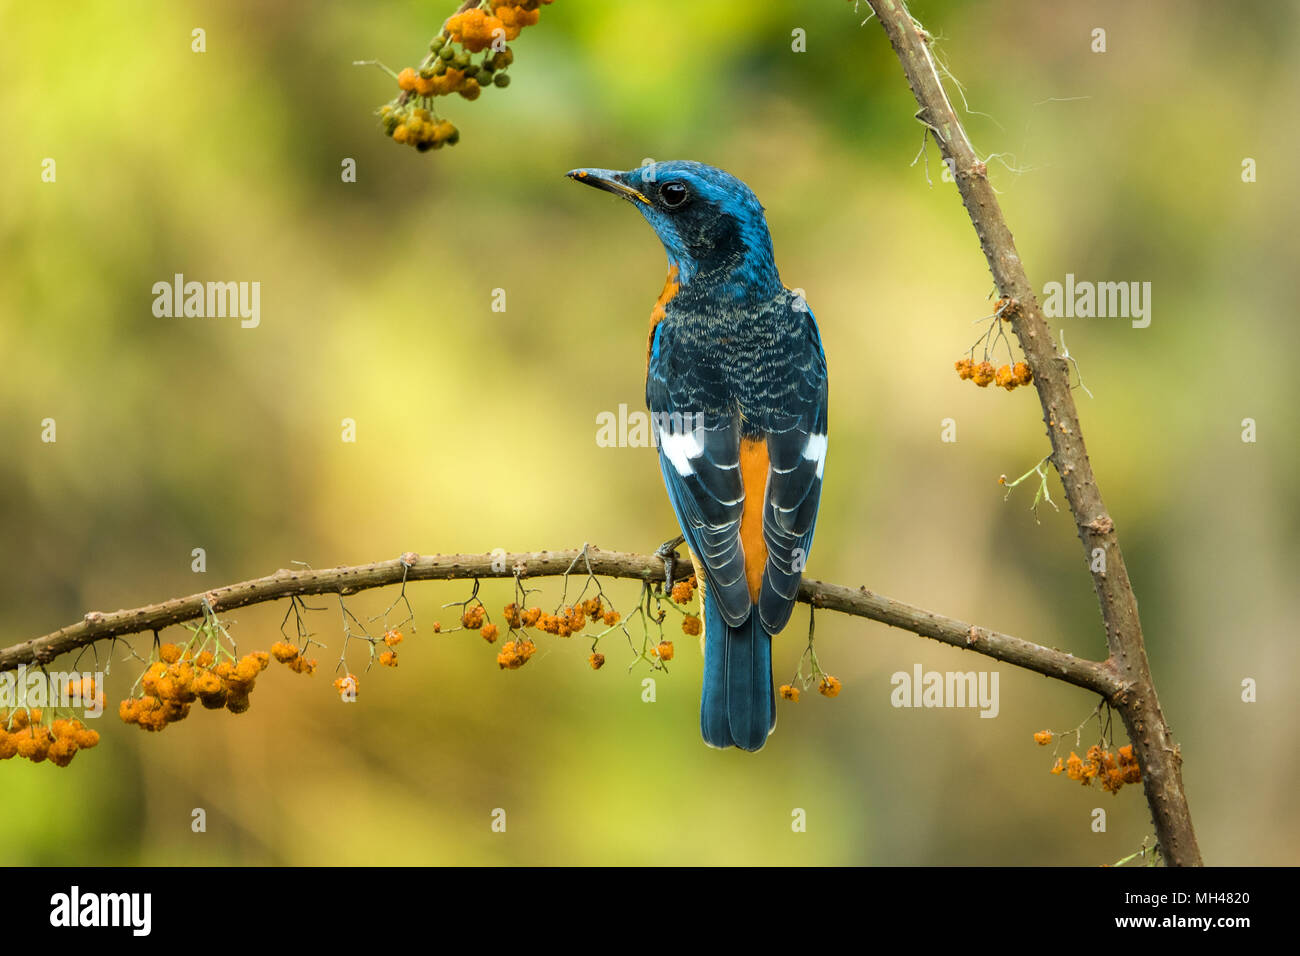 colorful birds in Kerala, india, wetland birds Stock Photo